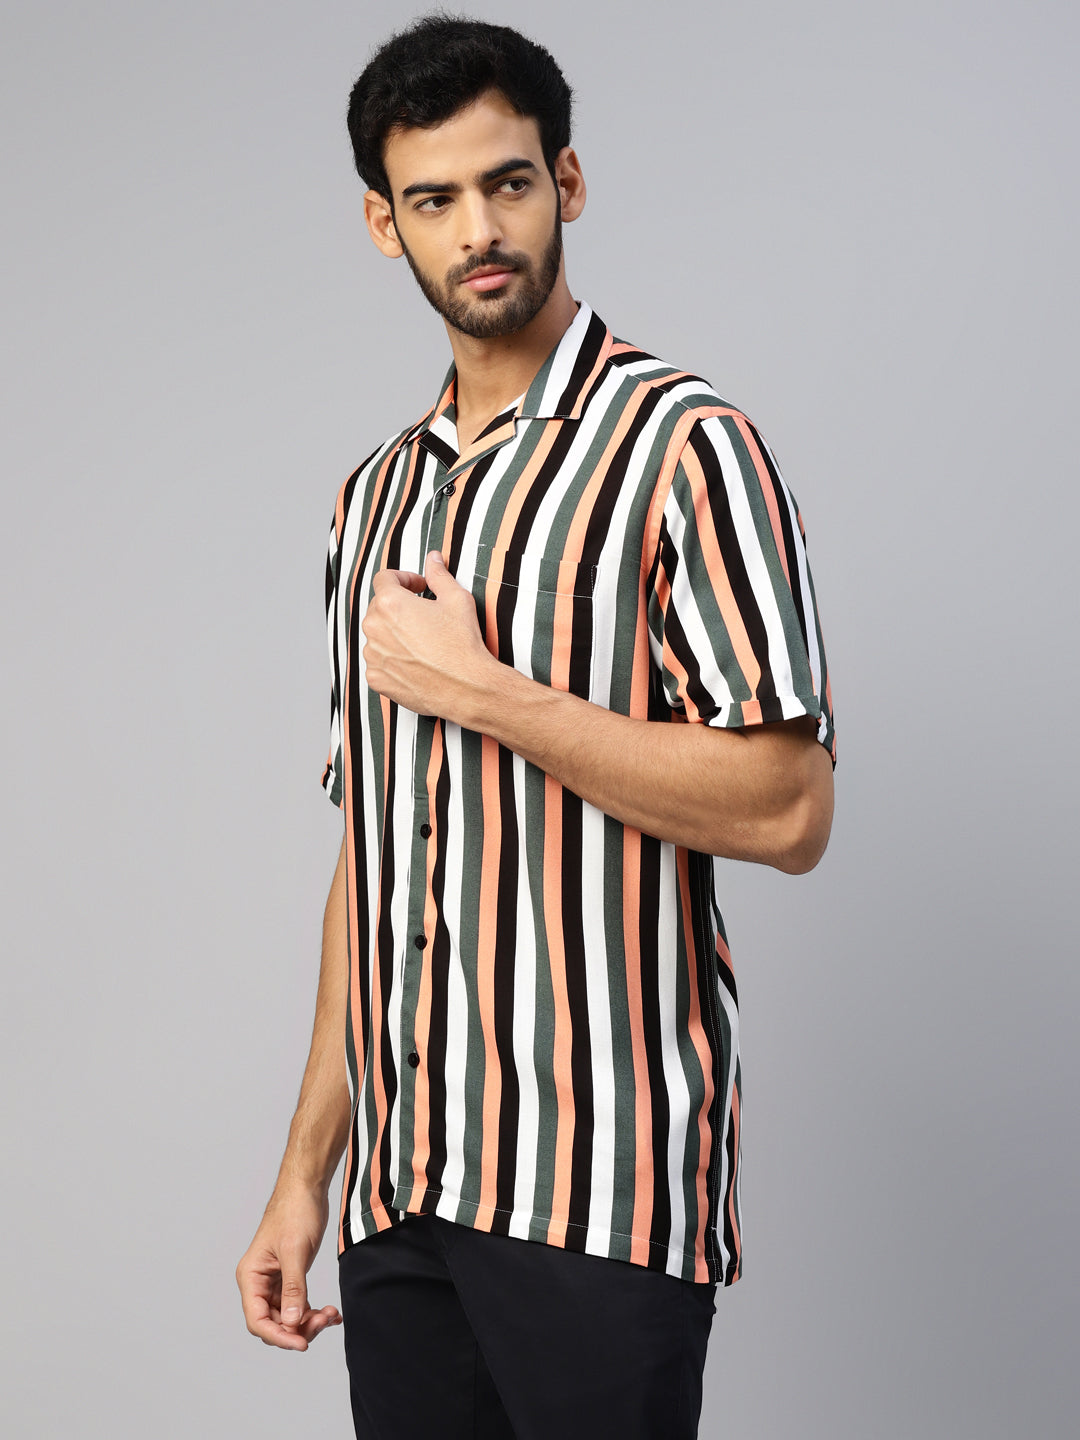 Men's Multi Colour Stripes Resort Shirt by Don Vino